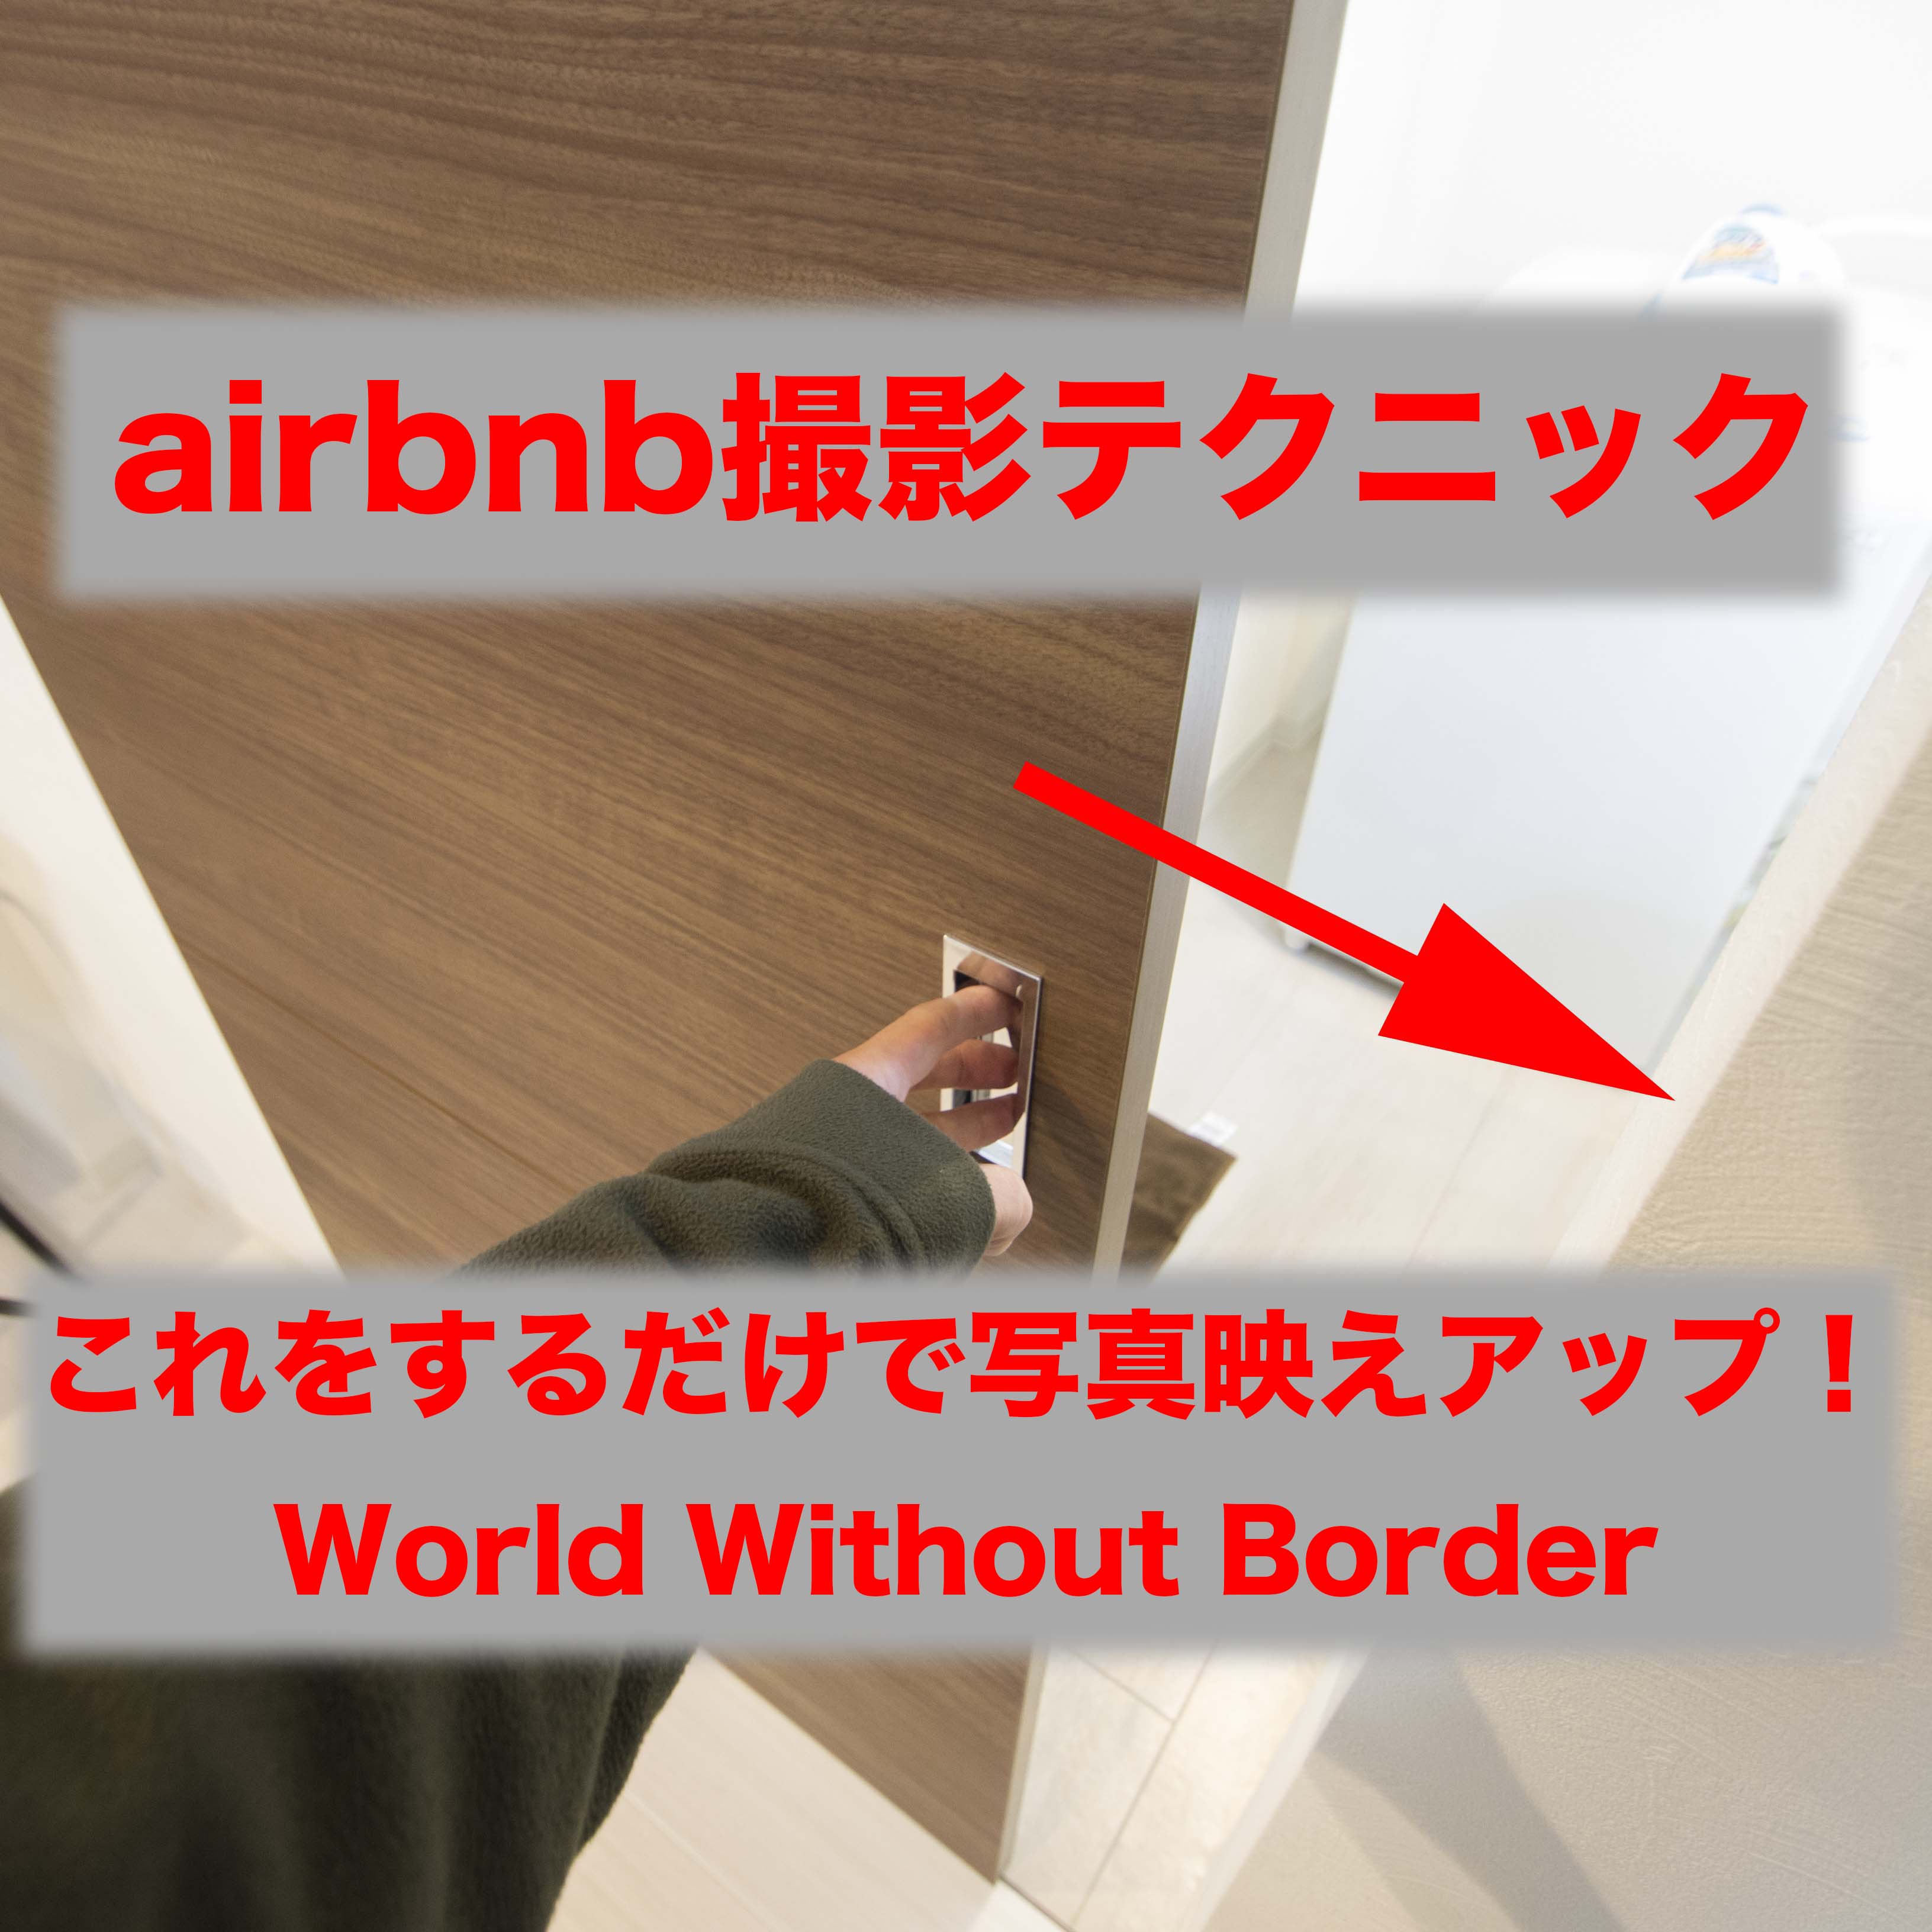 【airbnb運用テクニック】開きっぱなし厳禁。誰でもお部屋の写真映えがアップする撮影テクニック